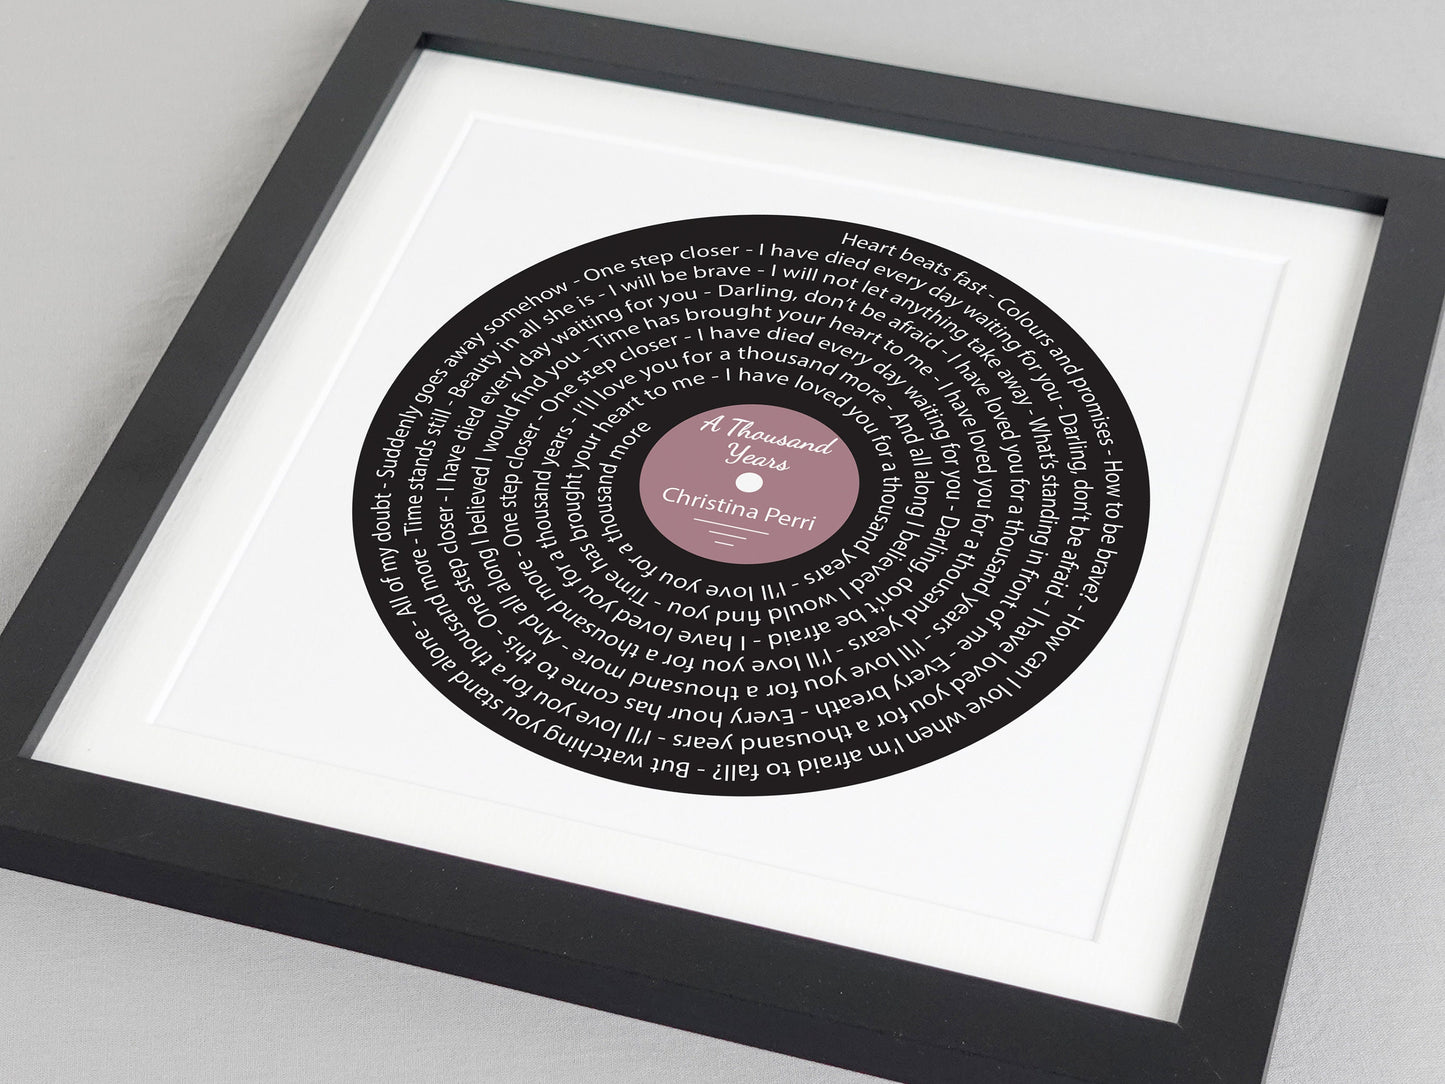 A Thousand Years - Christina Perri | Song lyric gift | Vinyl record print | First Dance present | Wedding gift | Anniversary present VA009